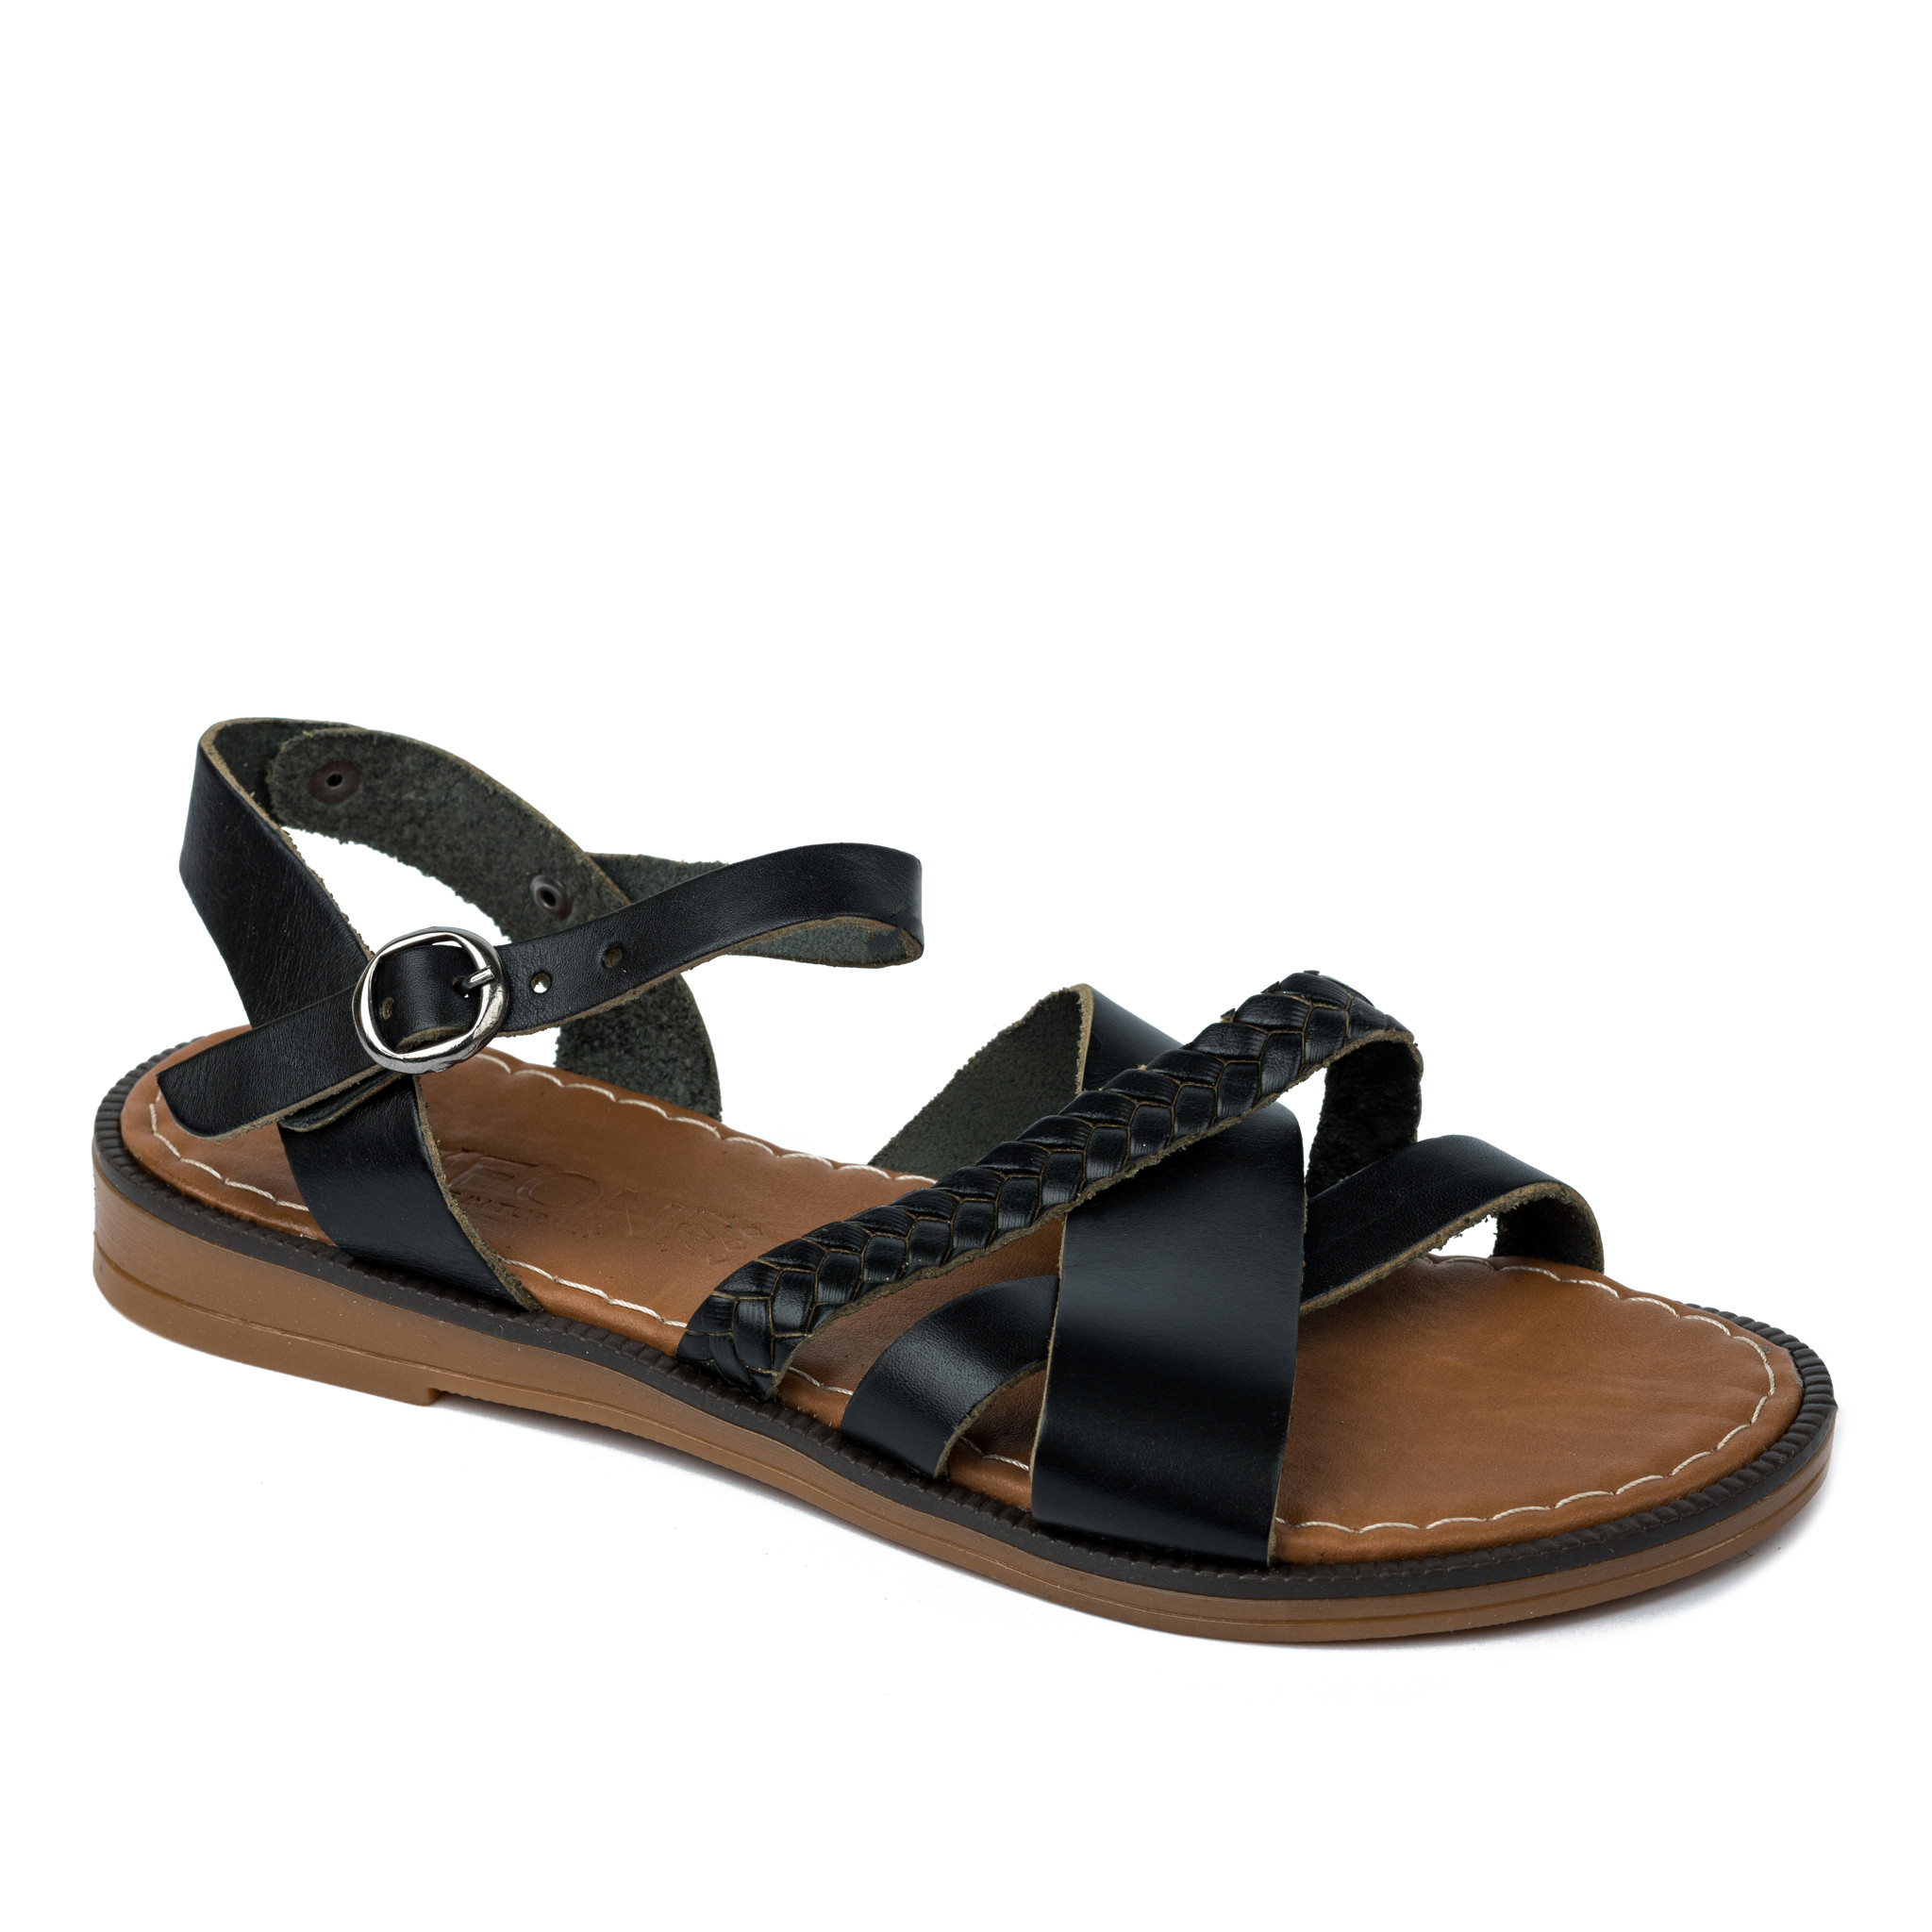 Women sandals A345 - BLACK